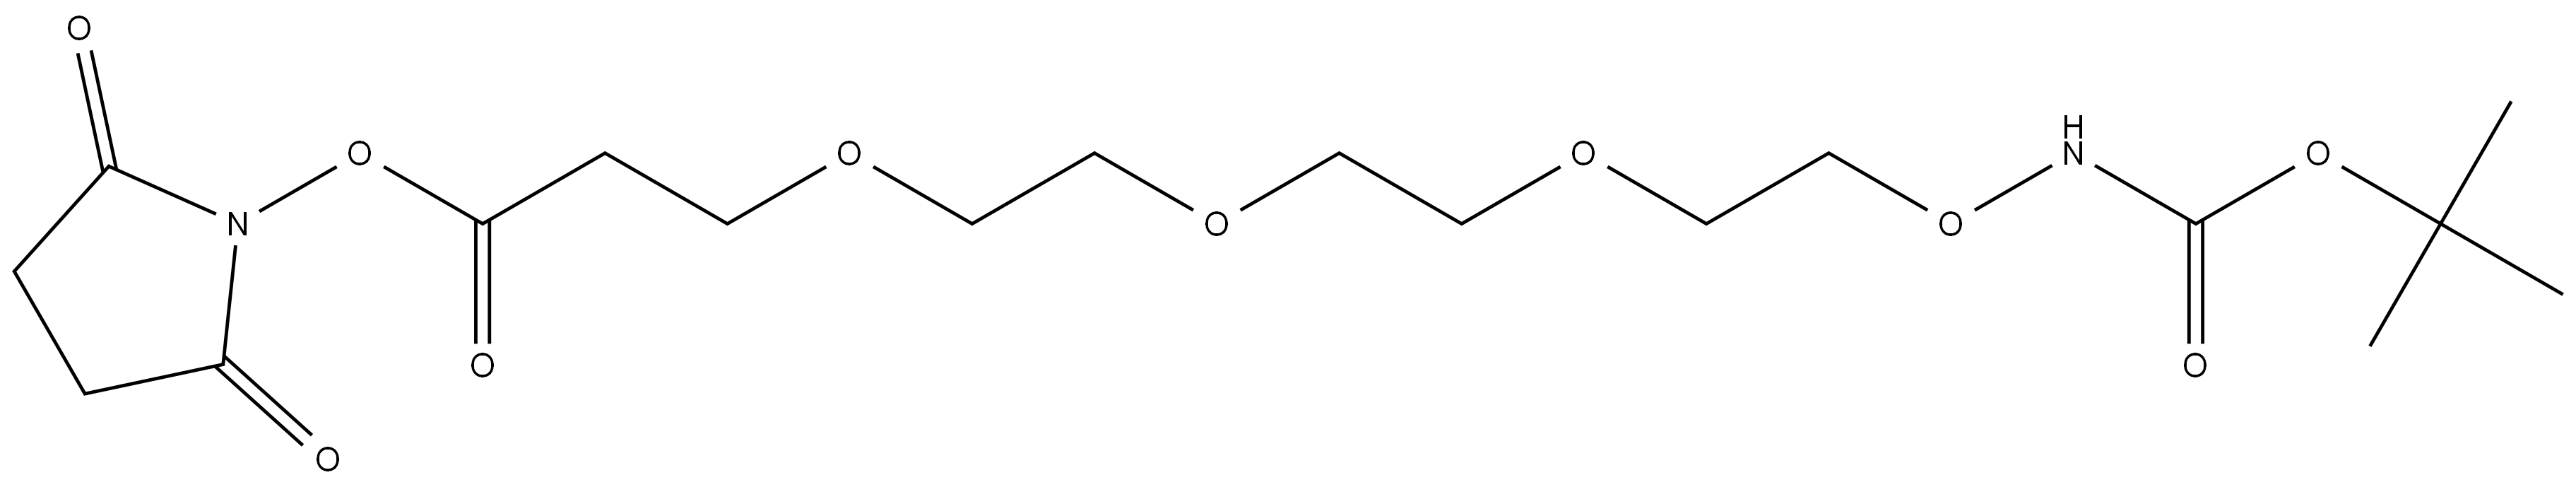 t-Boc-Aminooxy-PEG3-NHS ester Structure